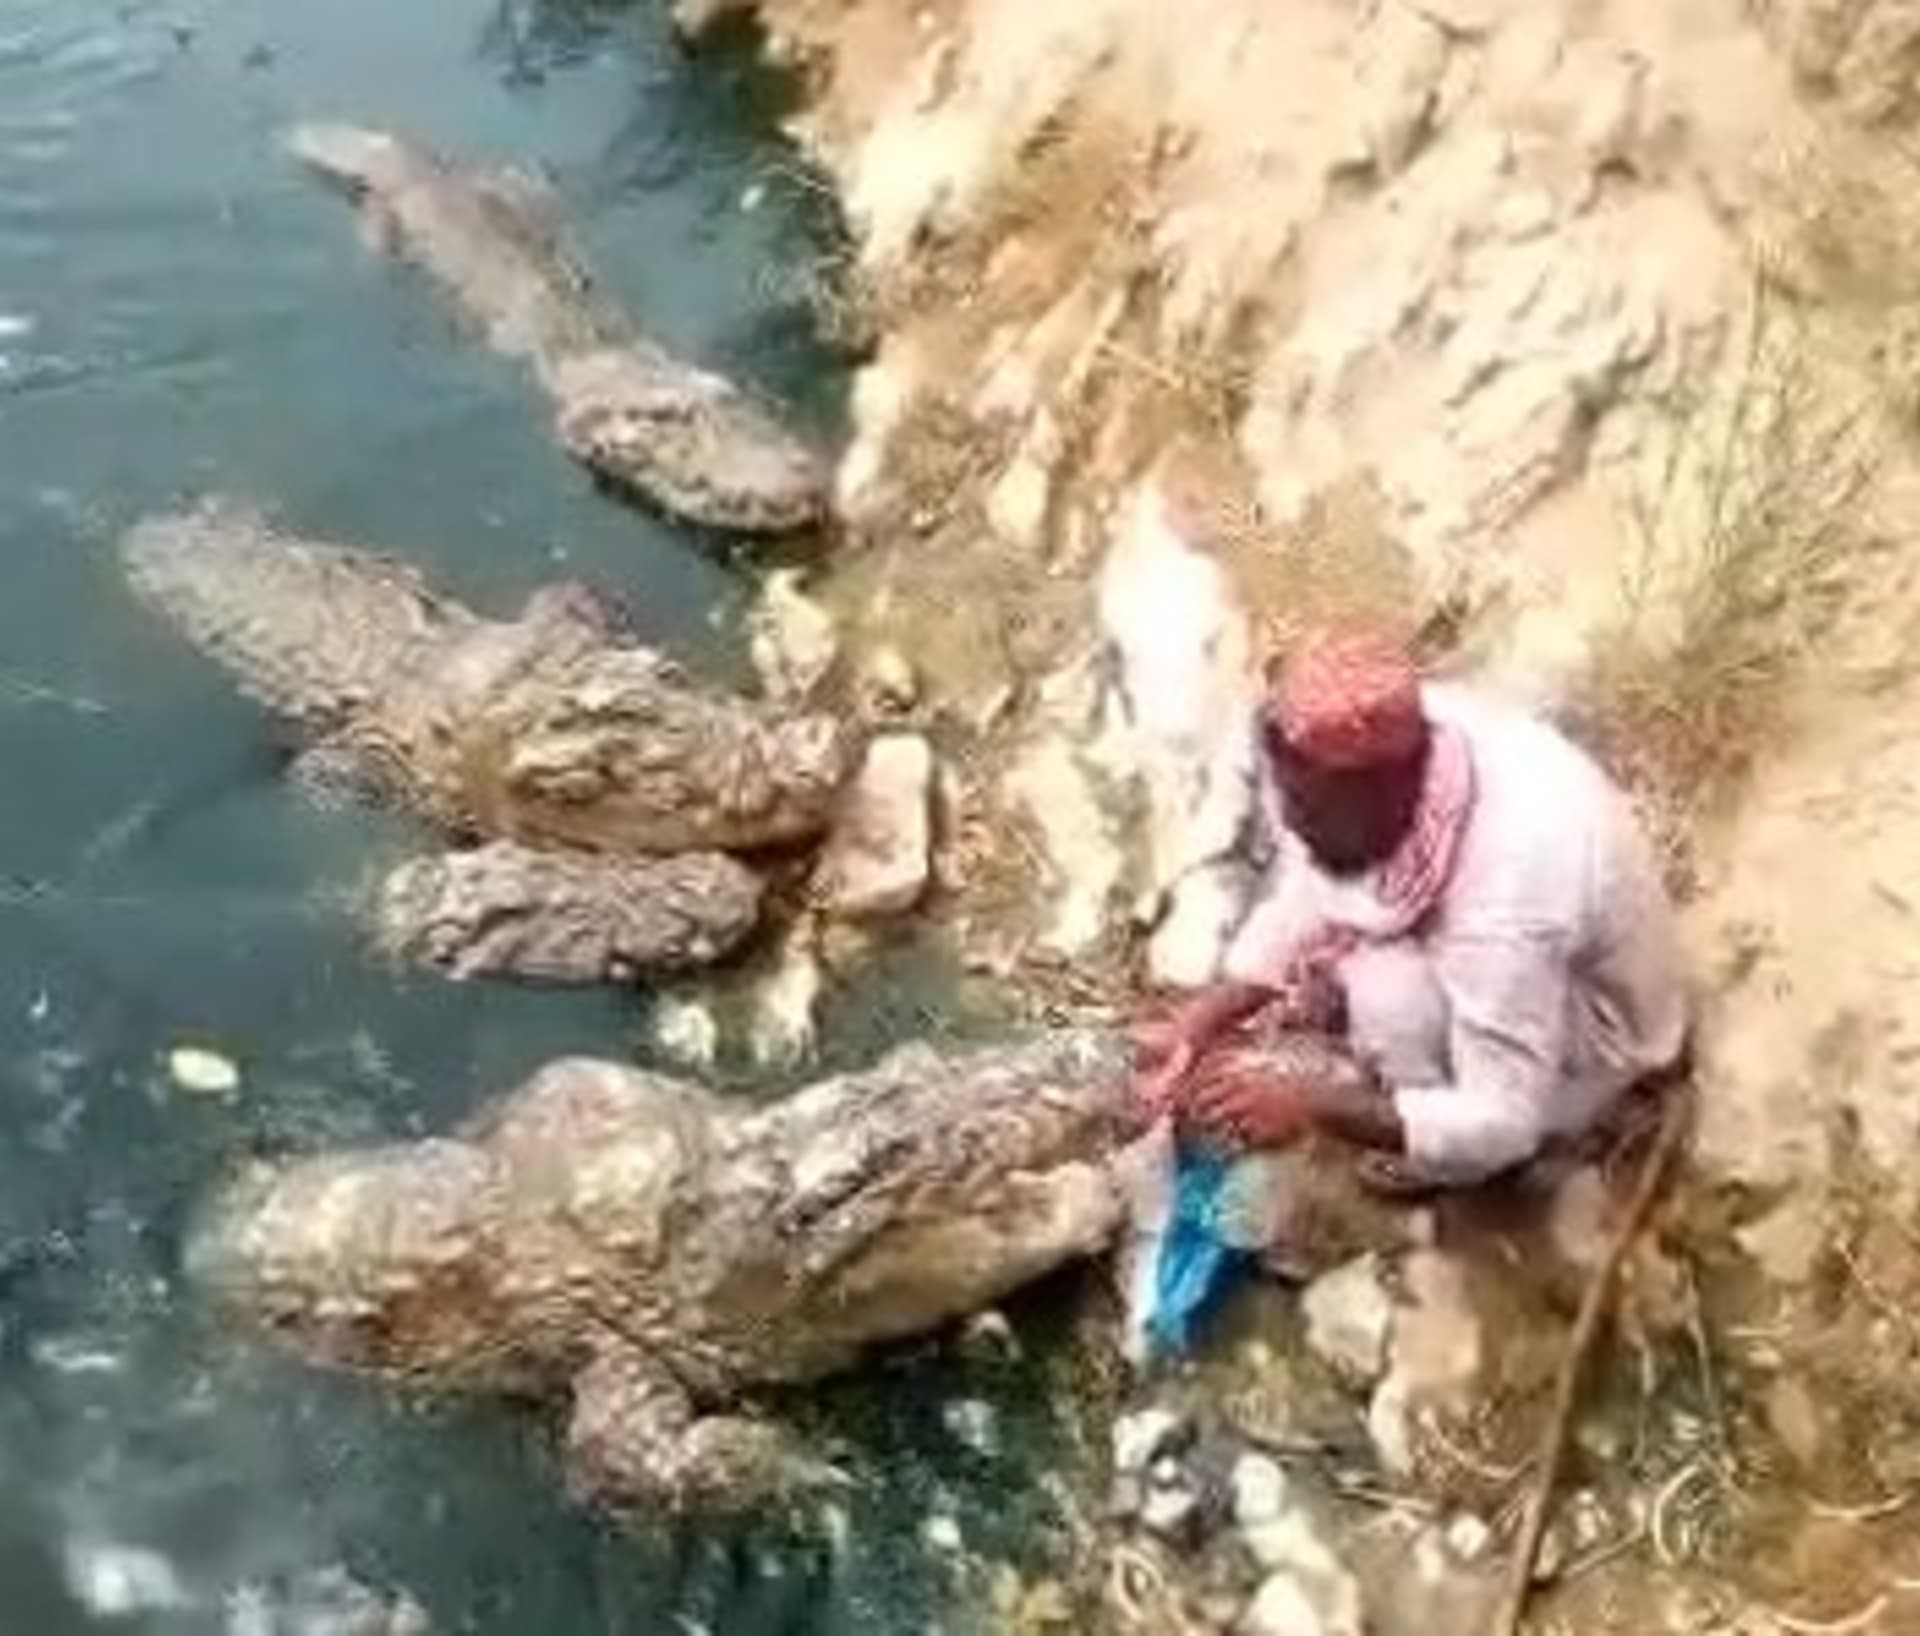 Muž krmil krokodýly přímo z ruky